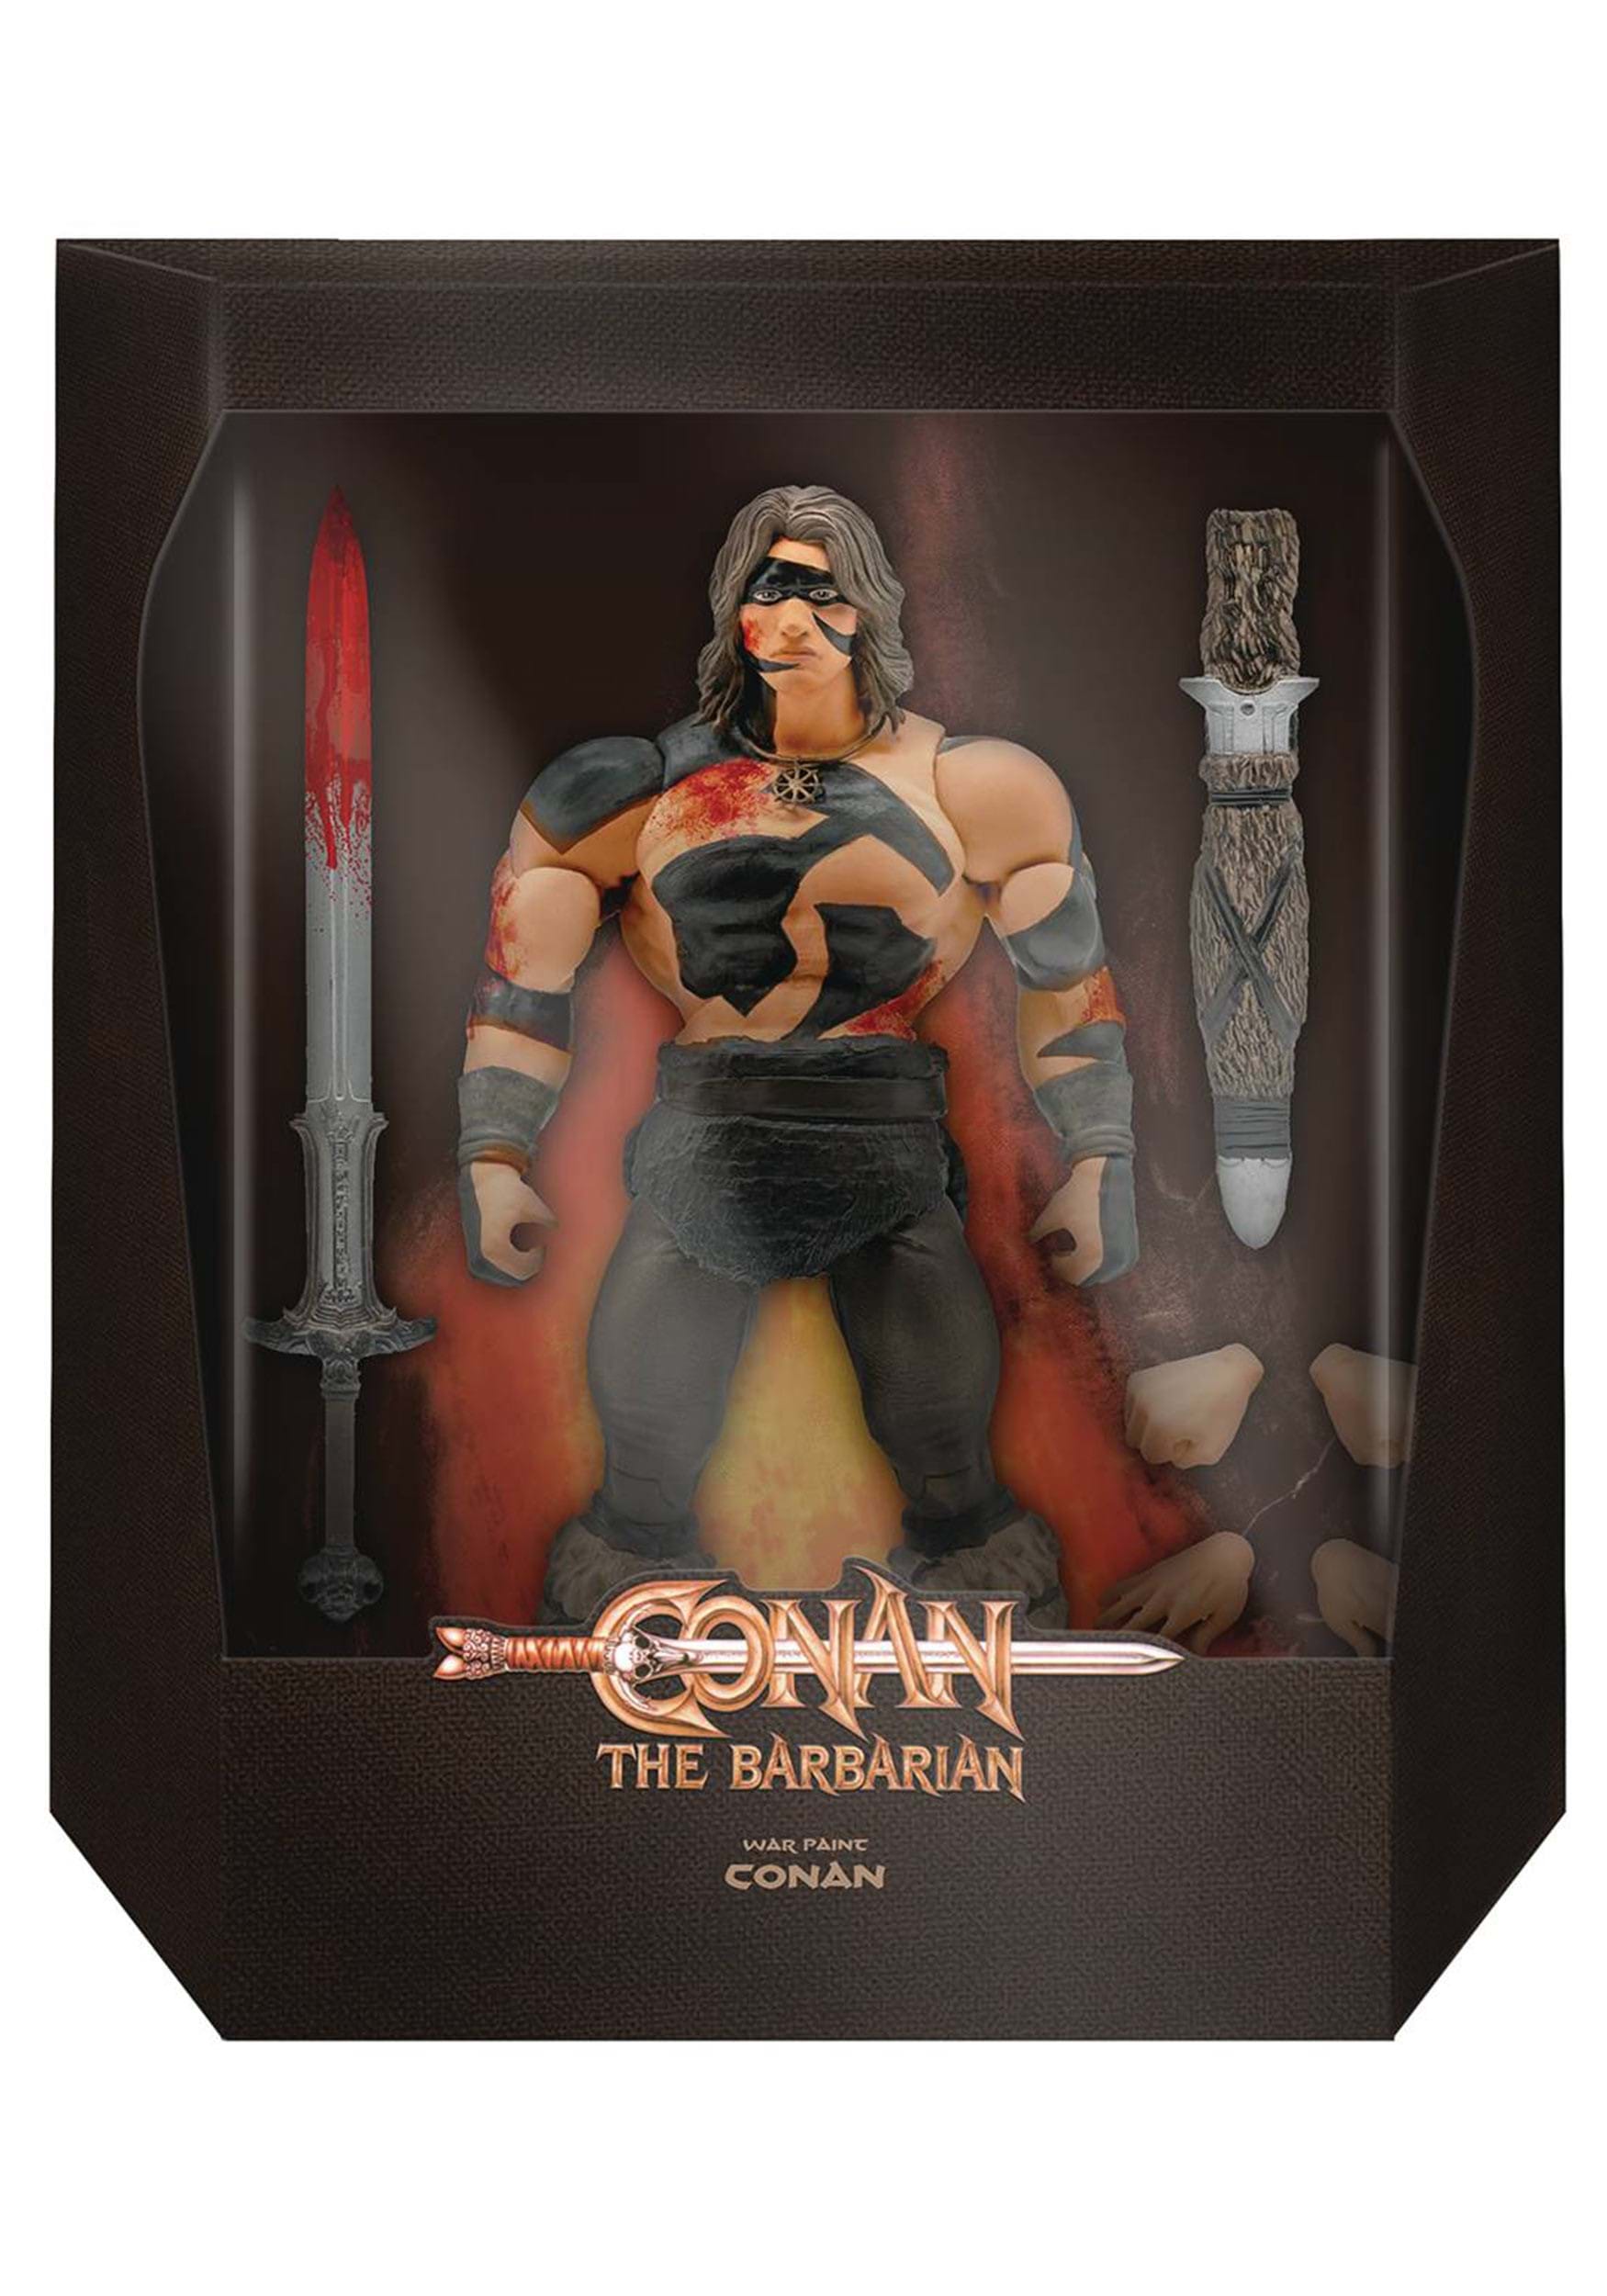 Conan The Barbarian Ultimates War Paint Conan Collectible Action Figure